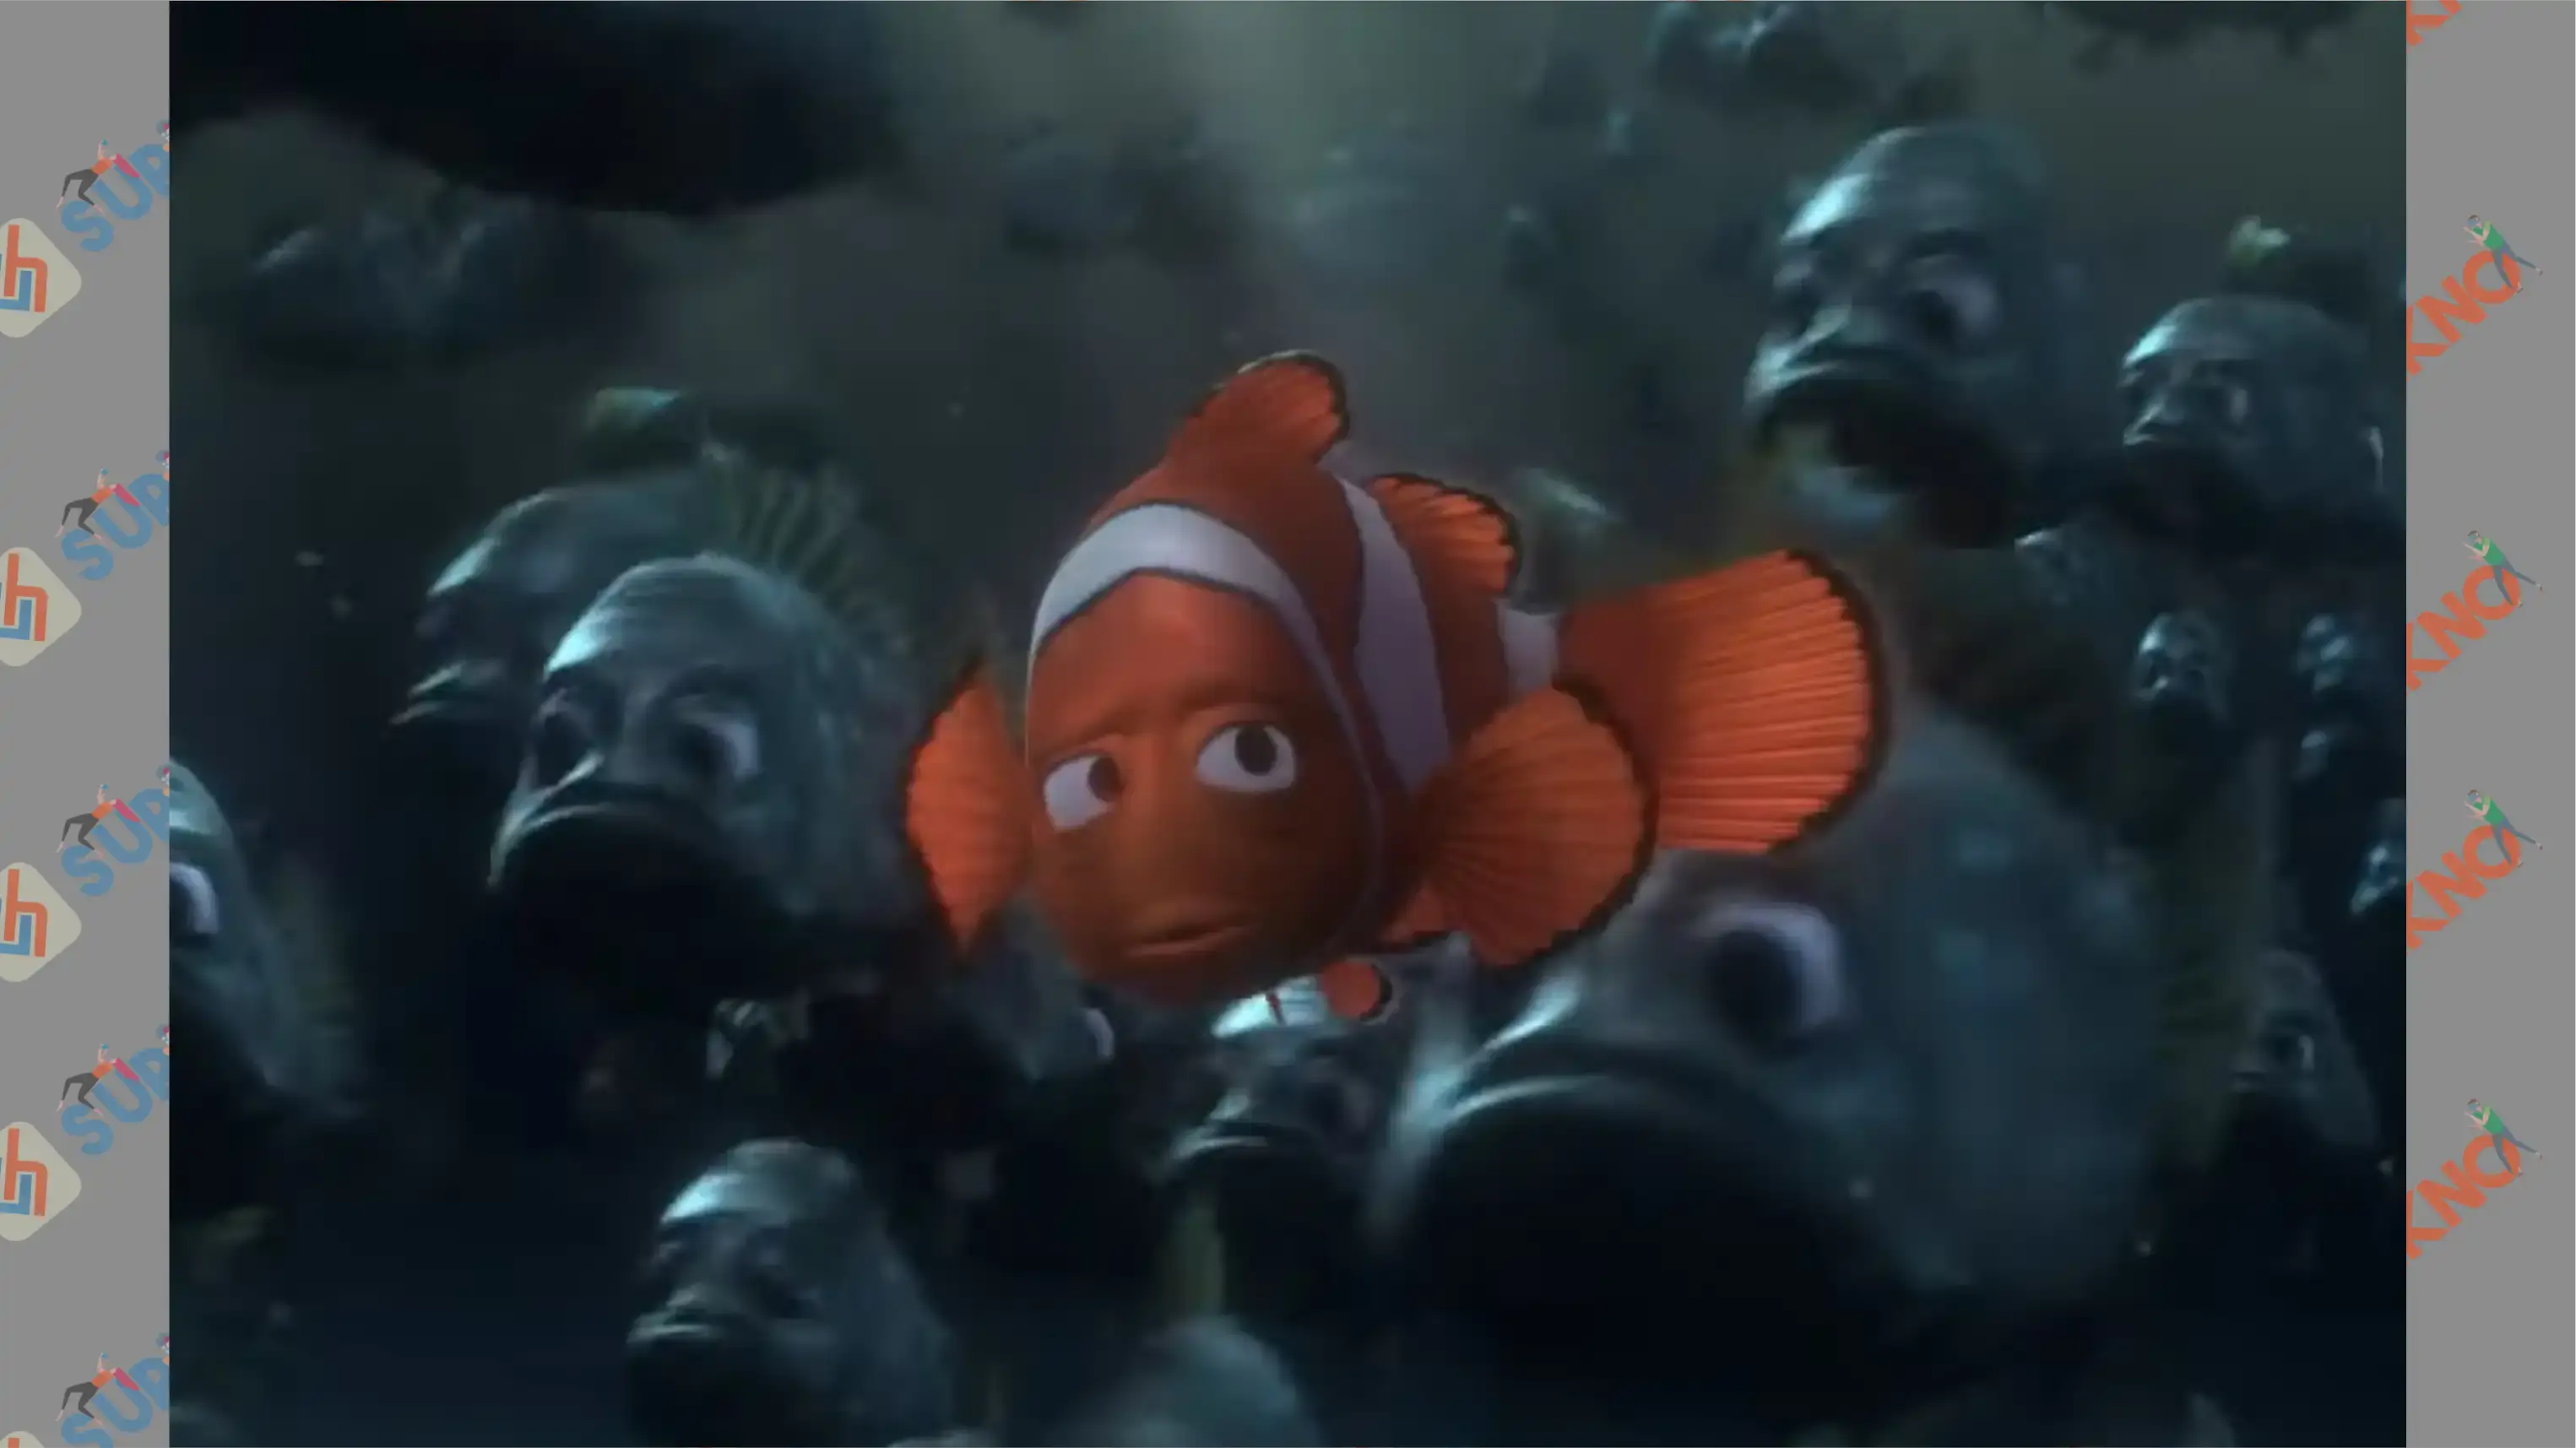 2 Marlin - Karakter dalam Film kartun Finding Nemo Terfavorit